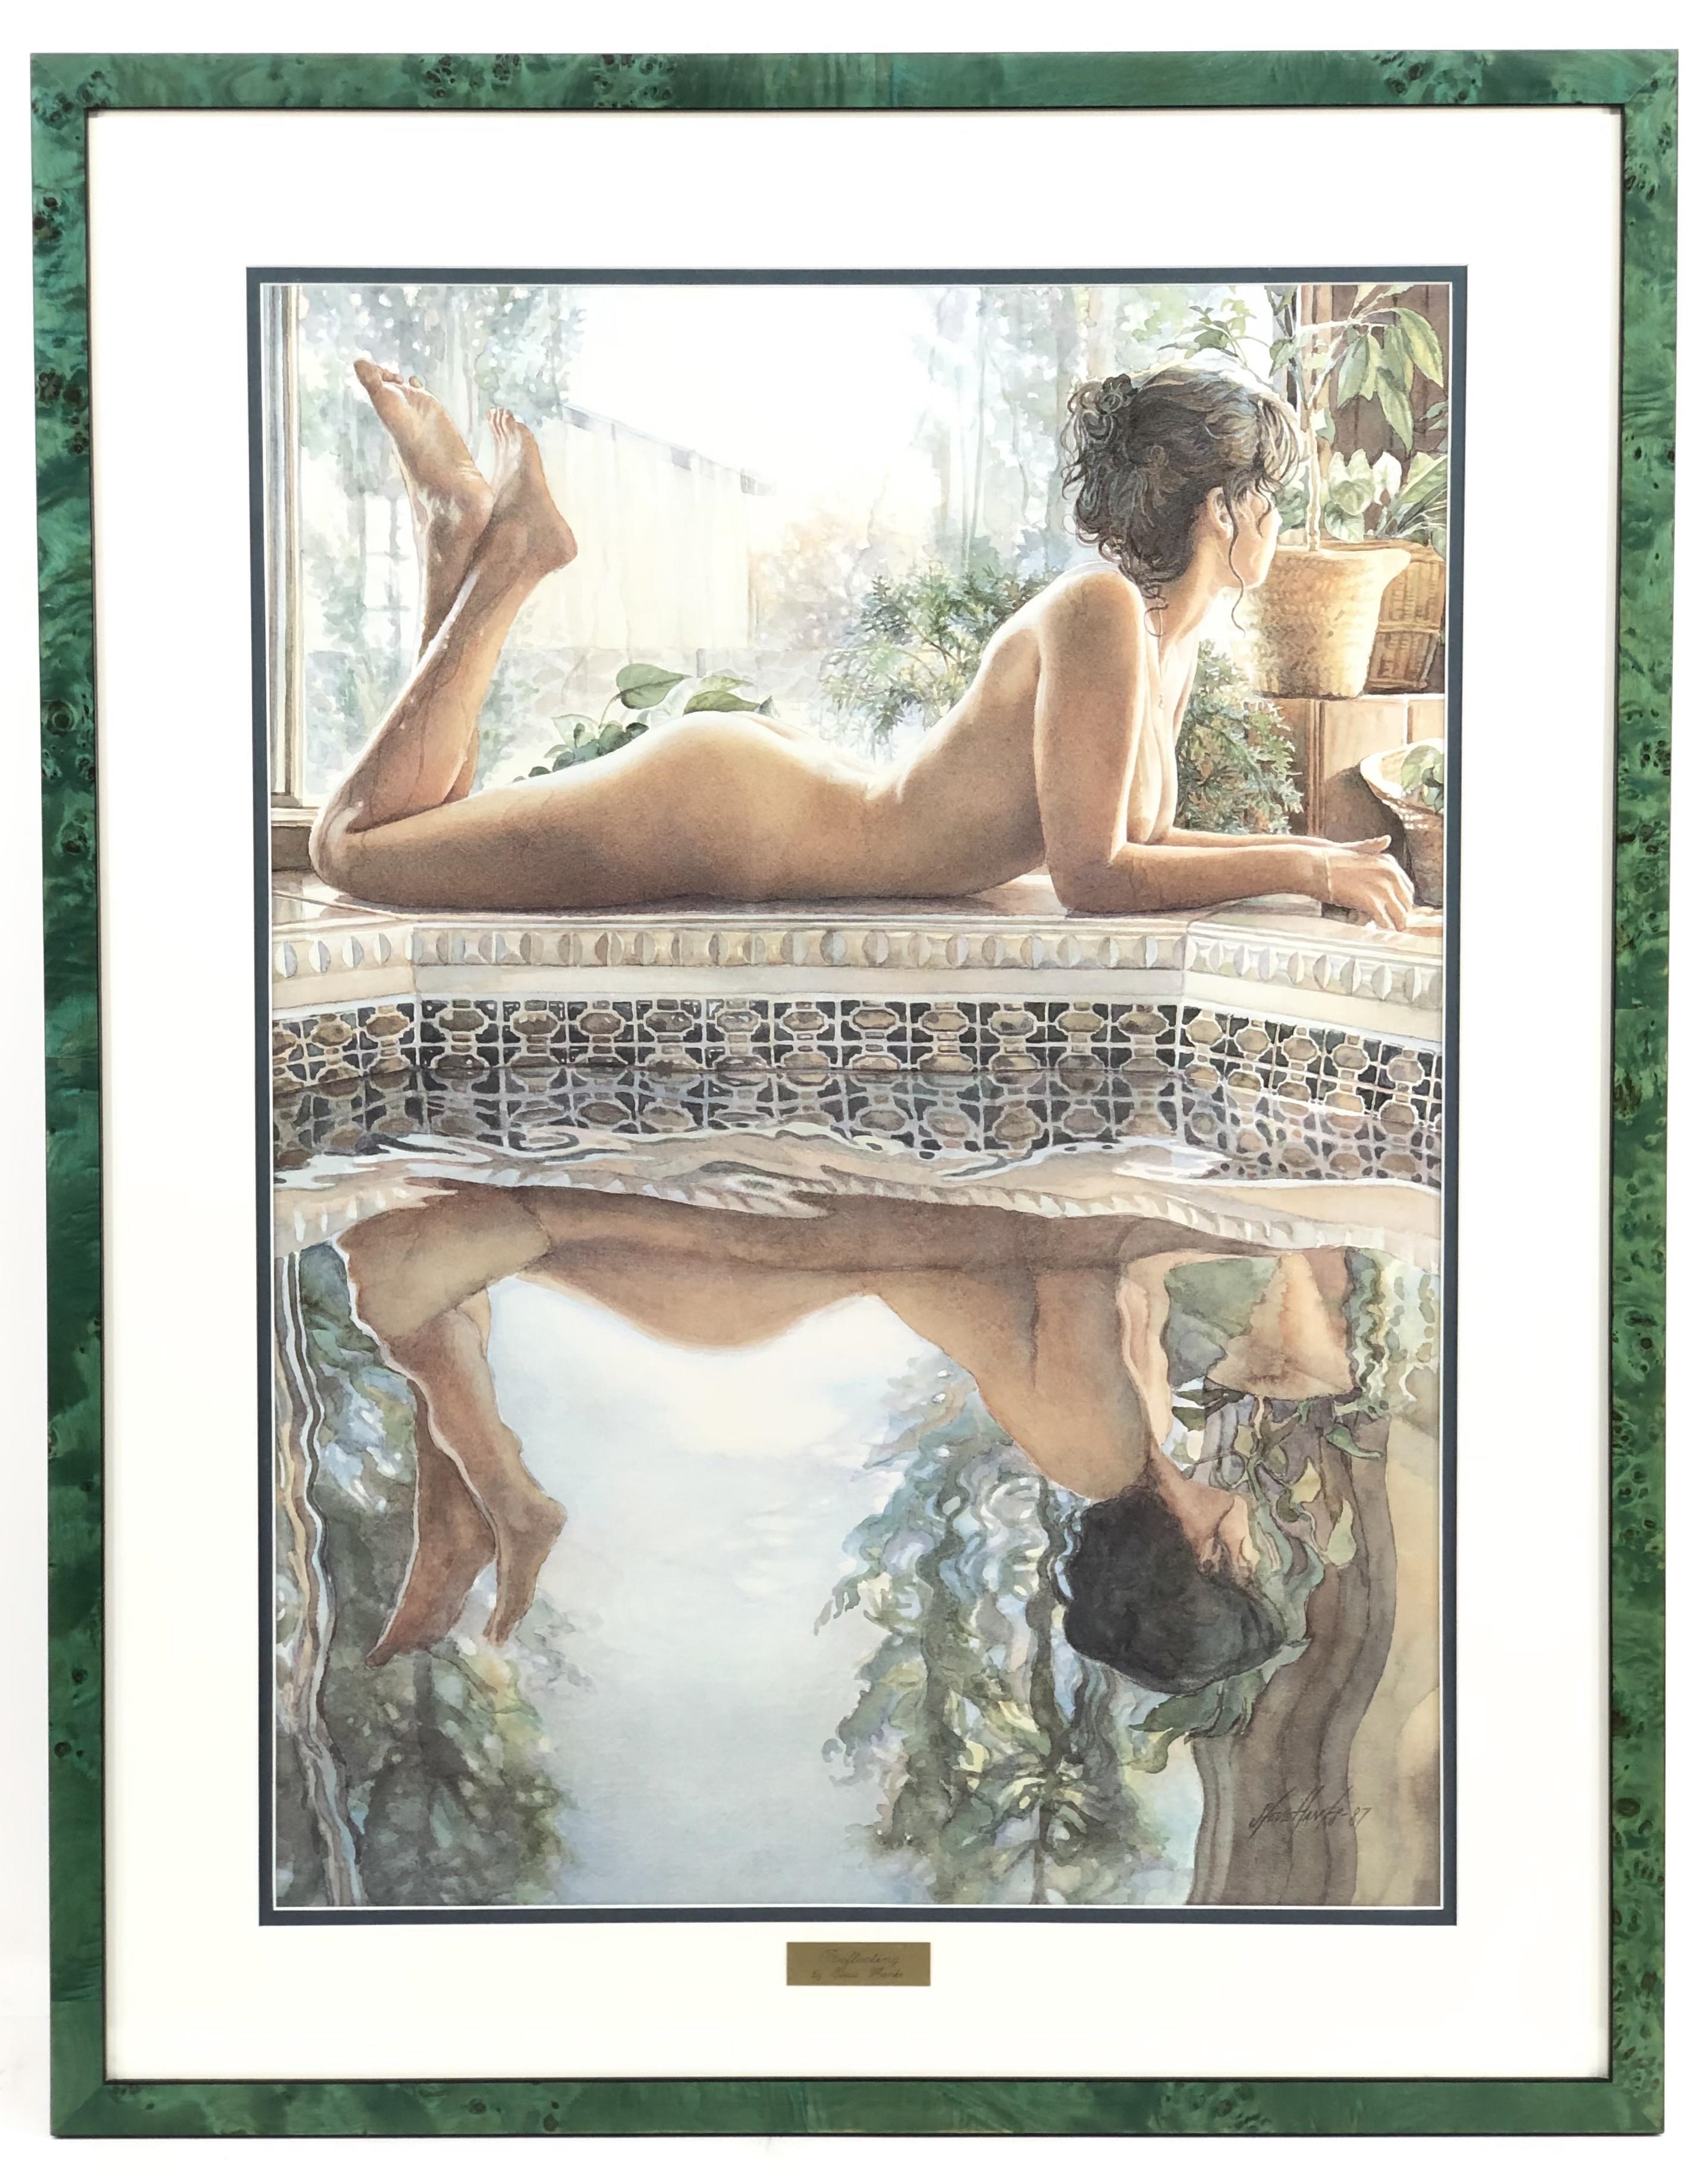 "REFLECTING" by Steve Hanks, 1980